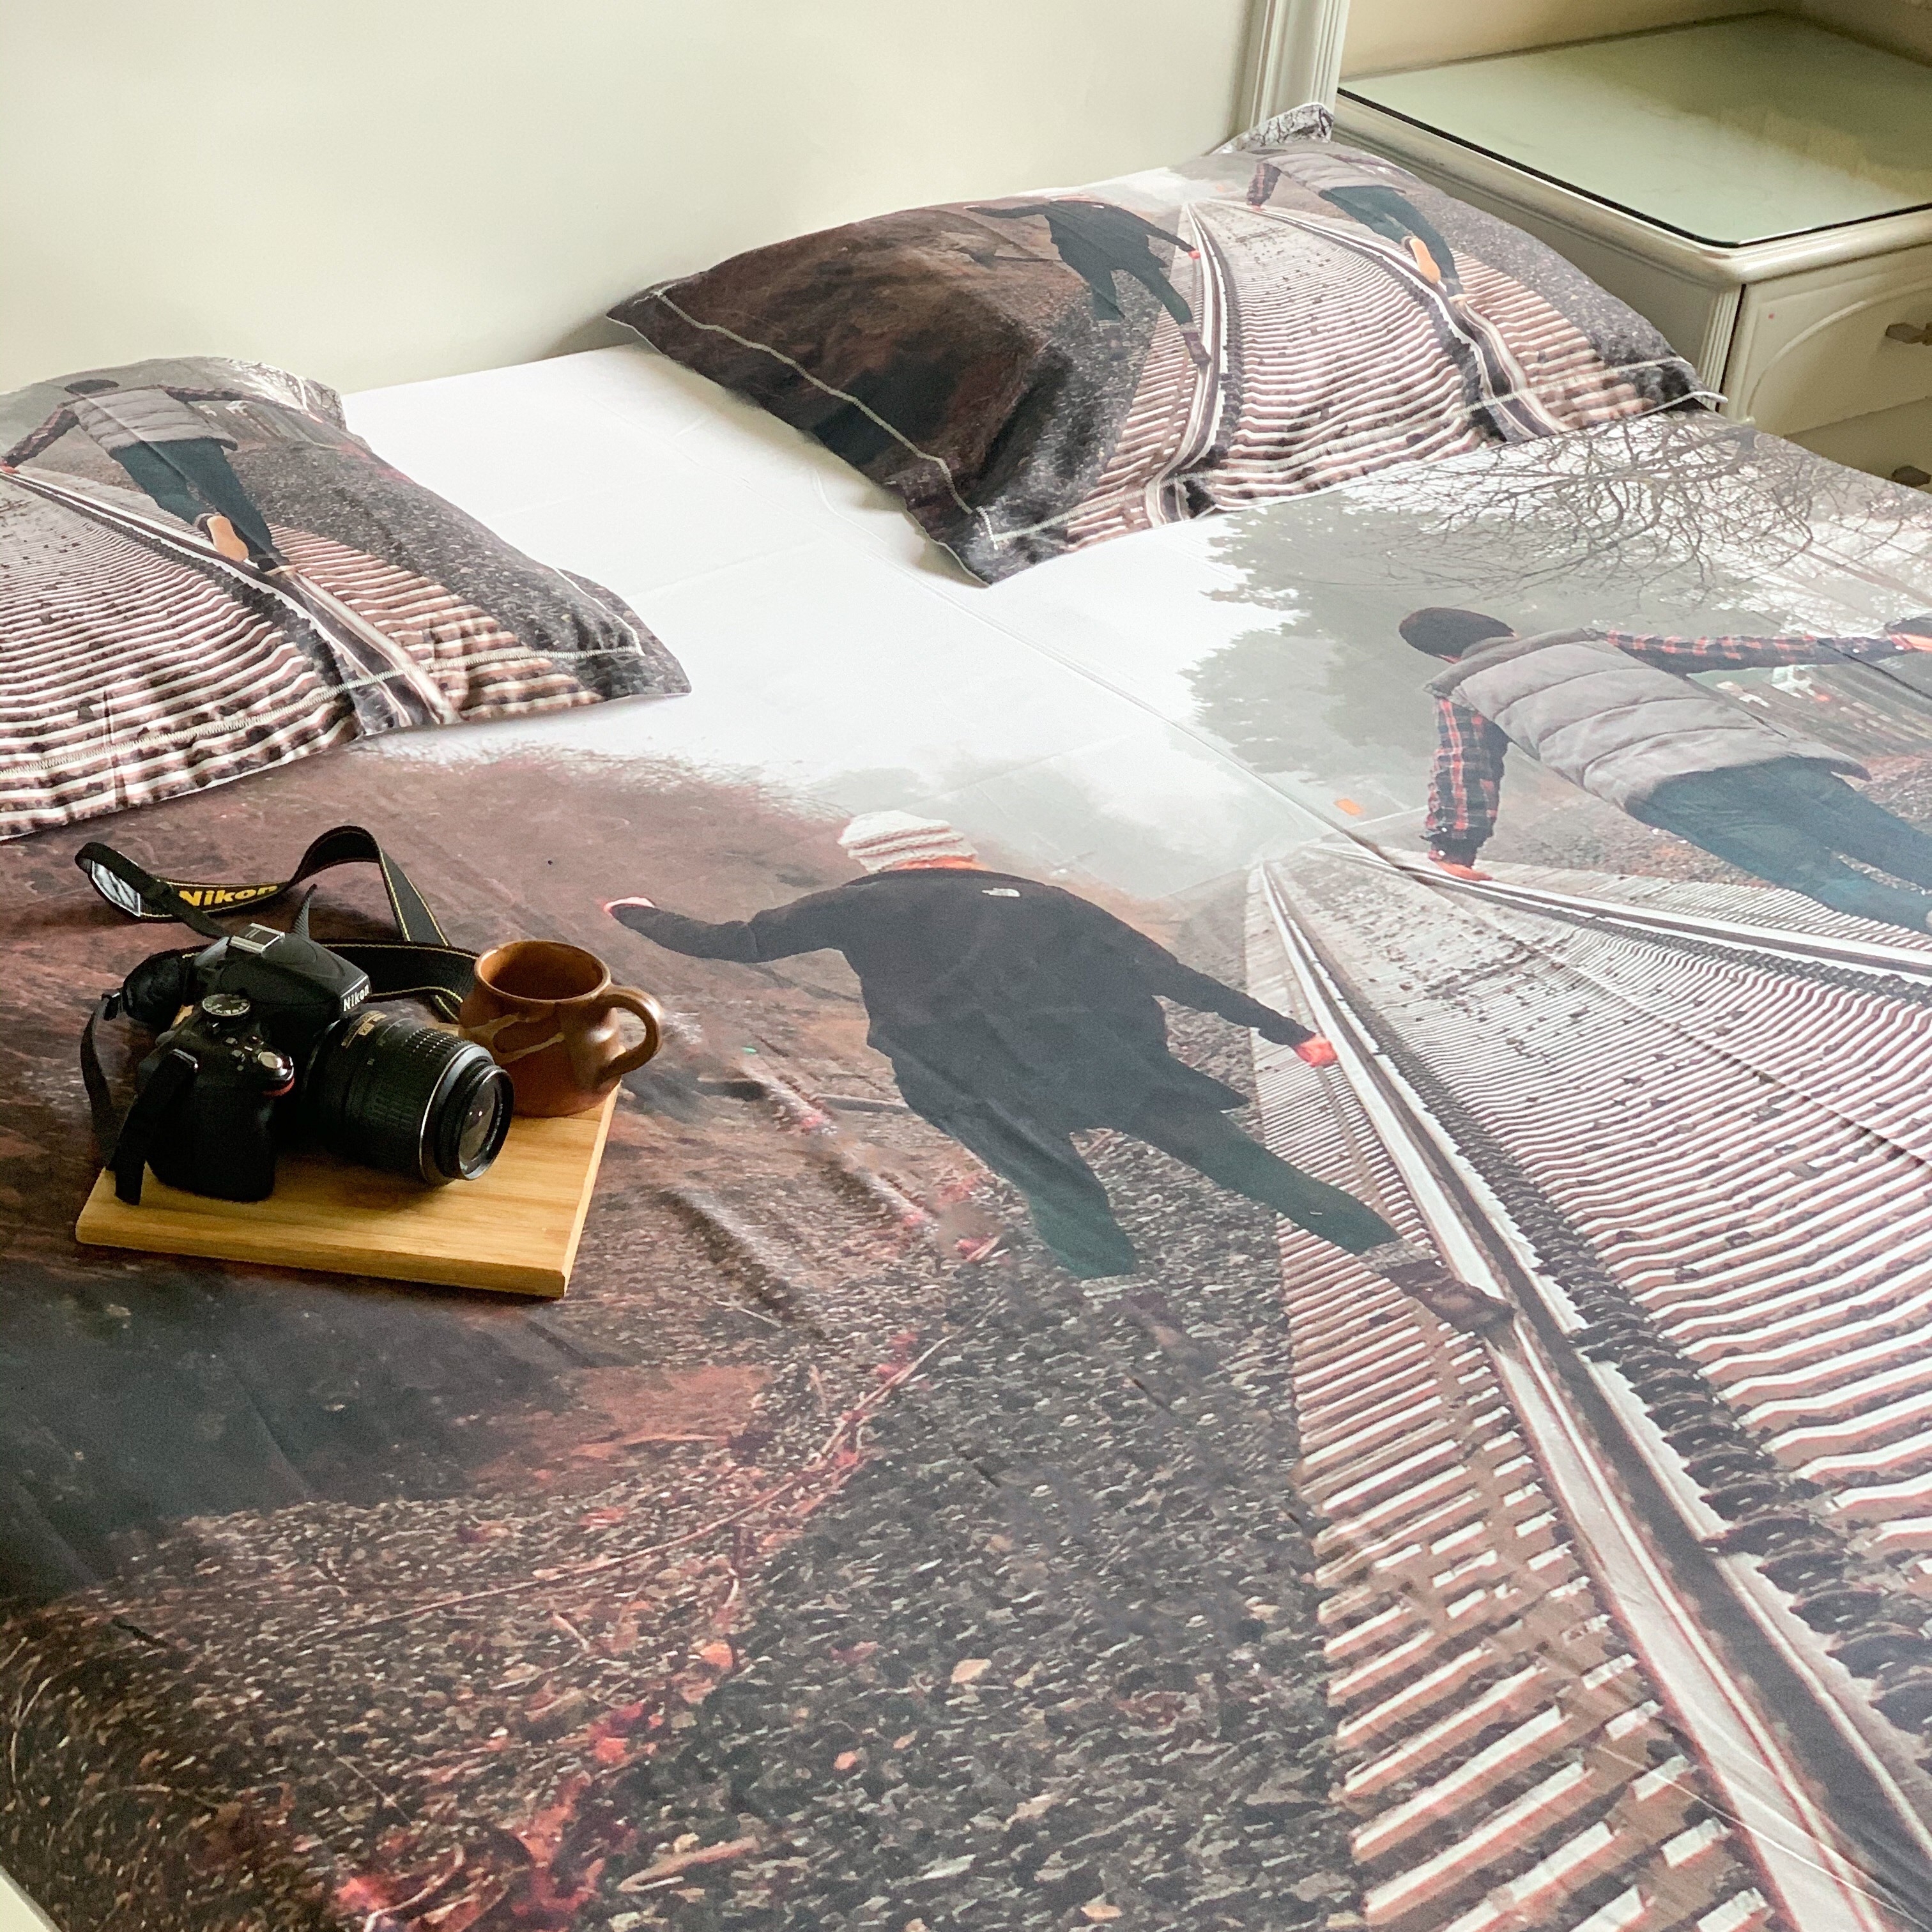 Boria Bistar | BORIA BISTAR 400 TC 100% Cotton California King 3D Digital Printed Bed Sheet|1